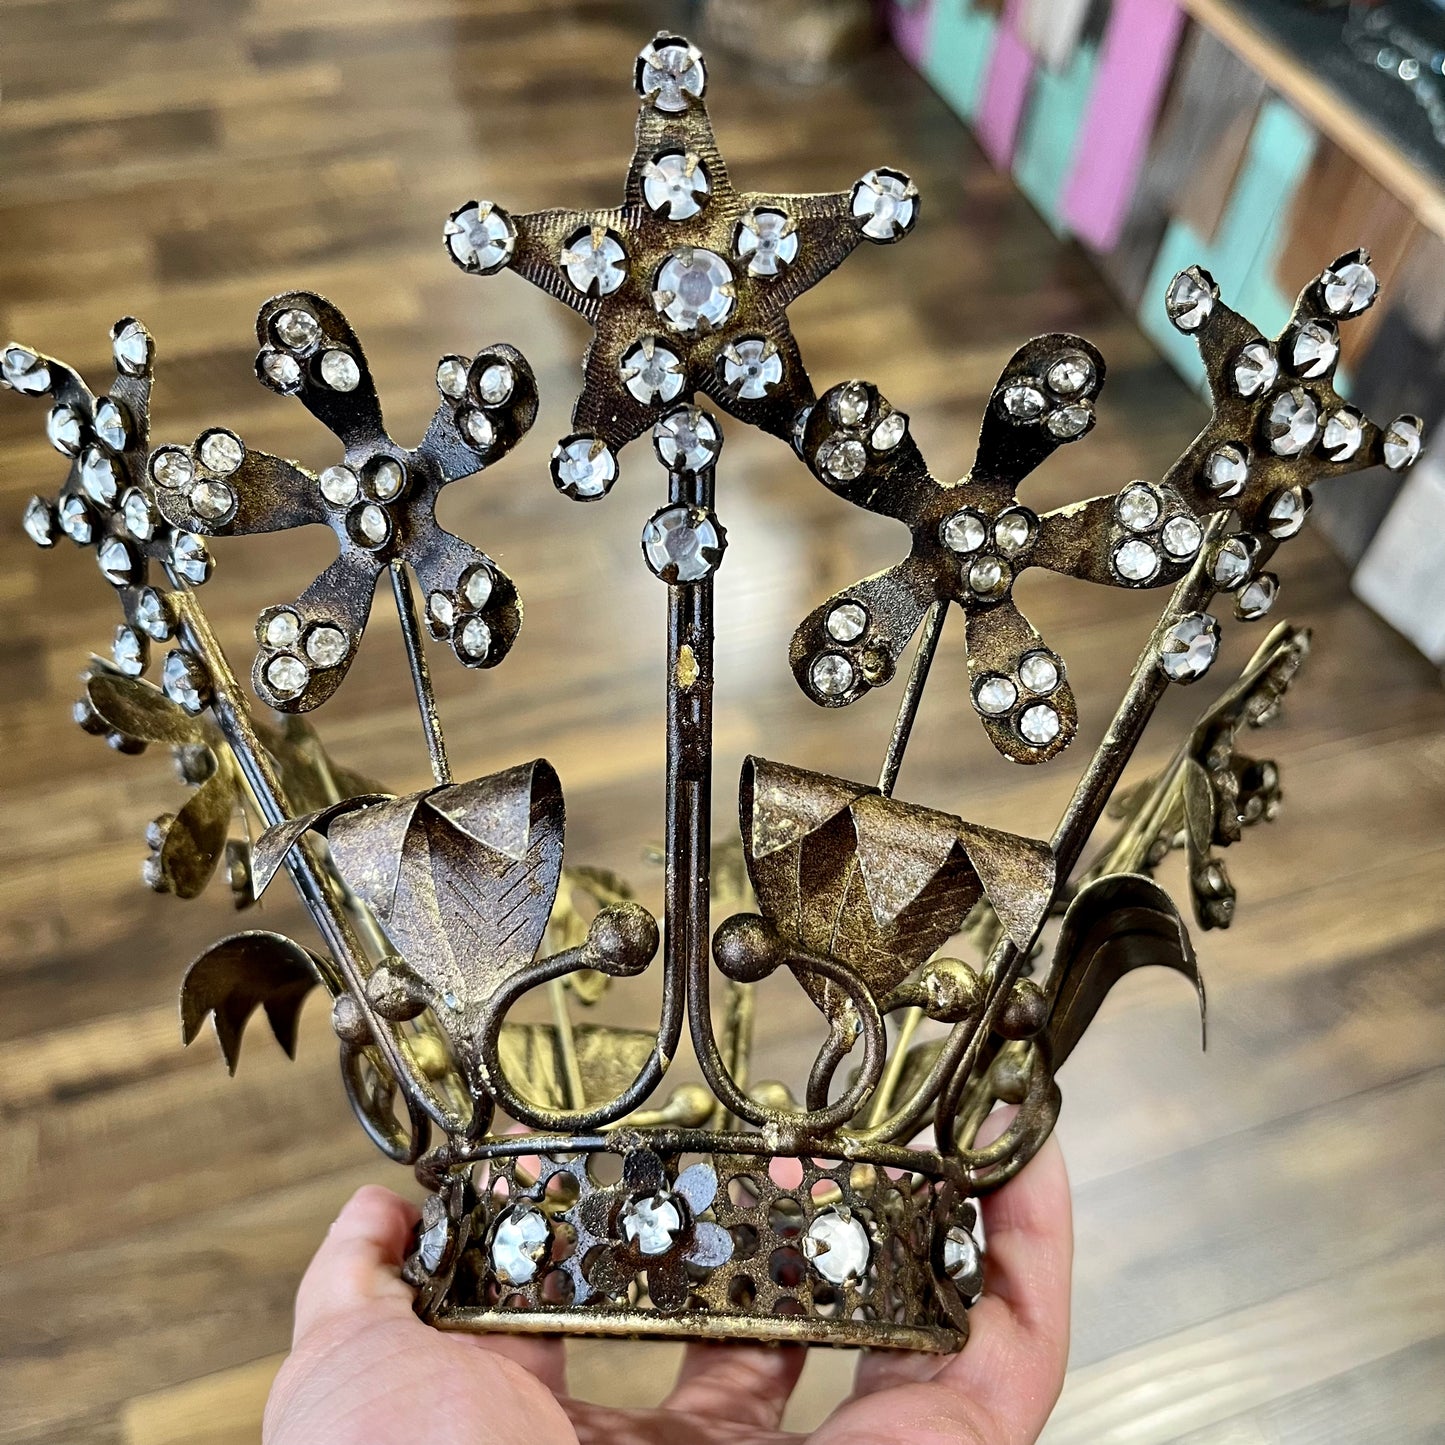 Star Jeweled Crowns